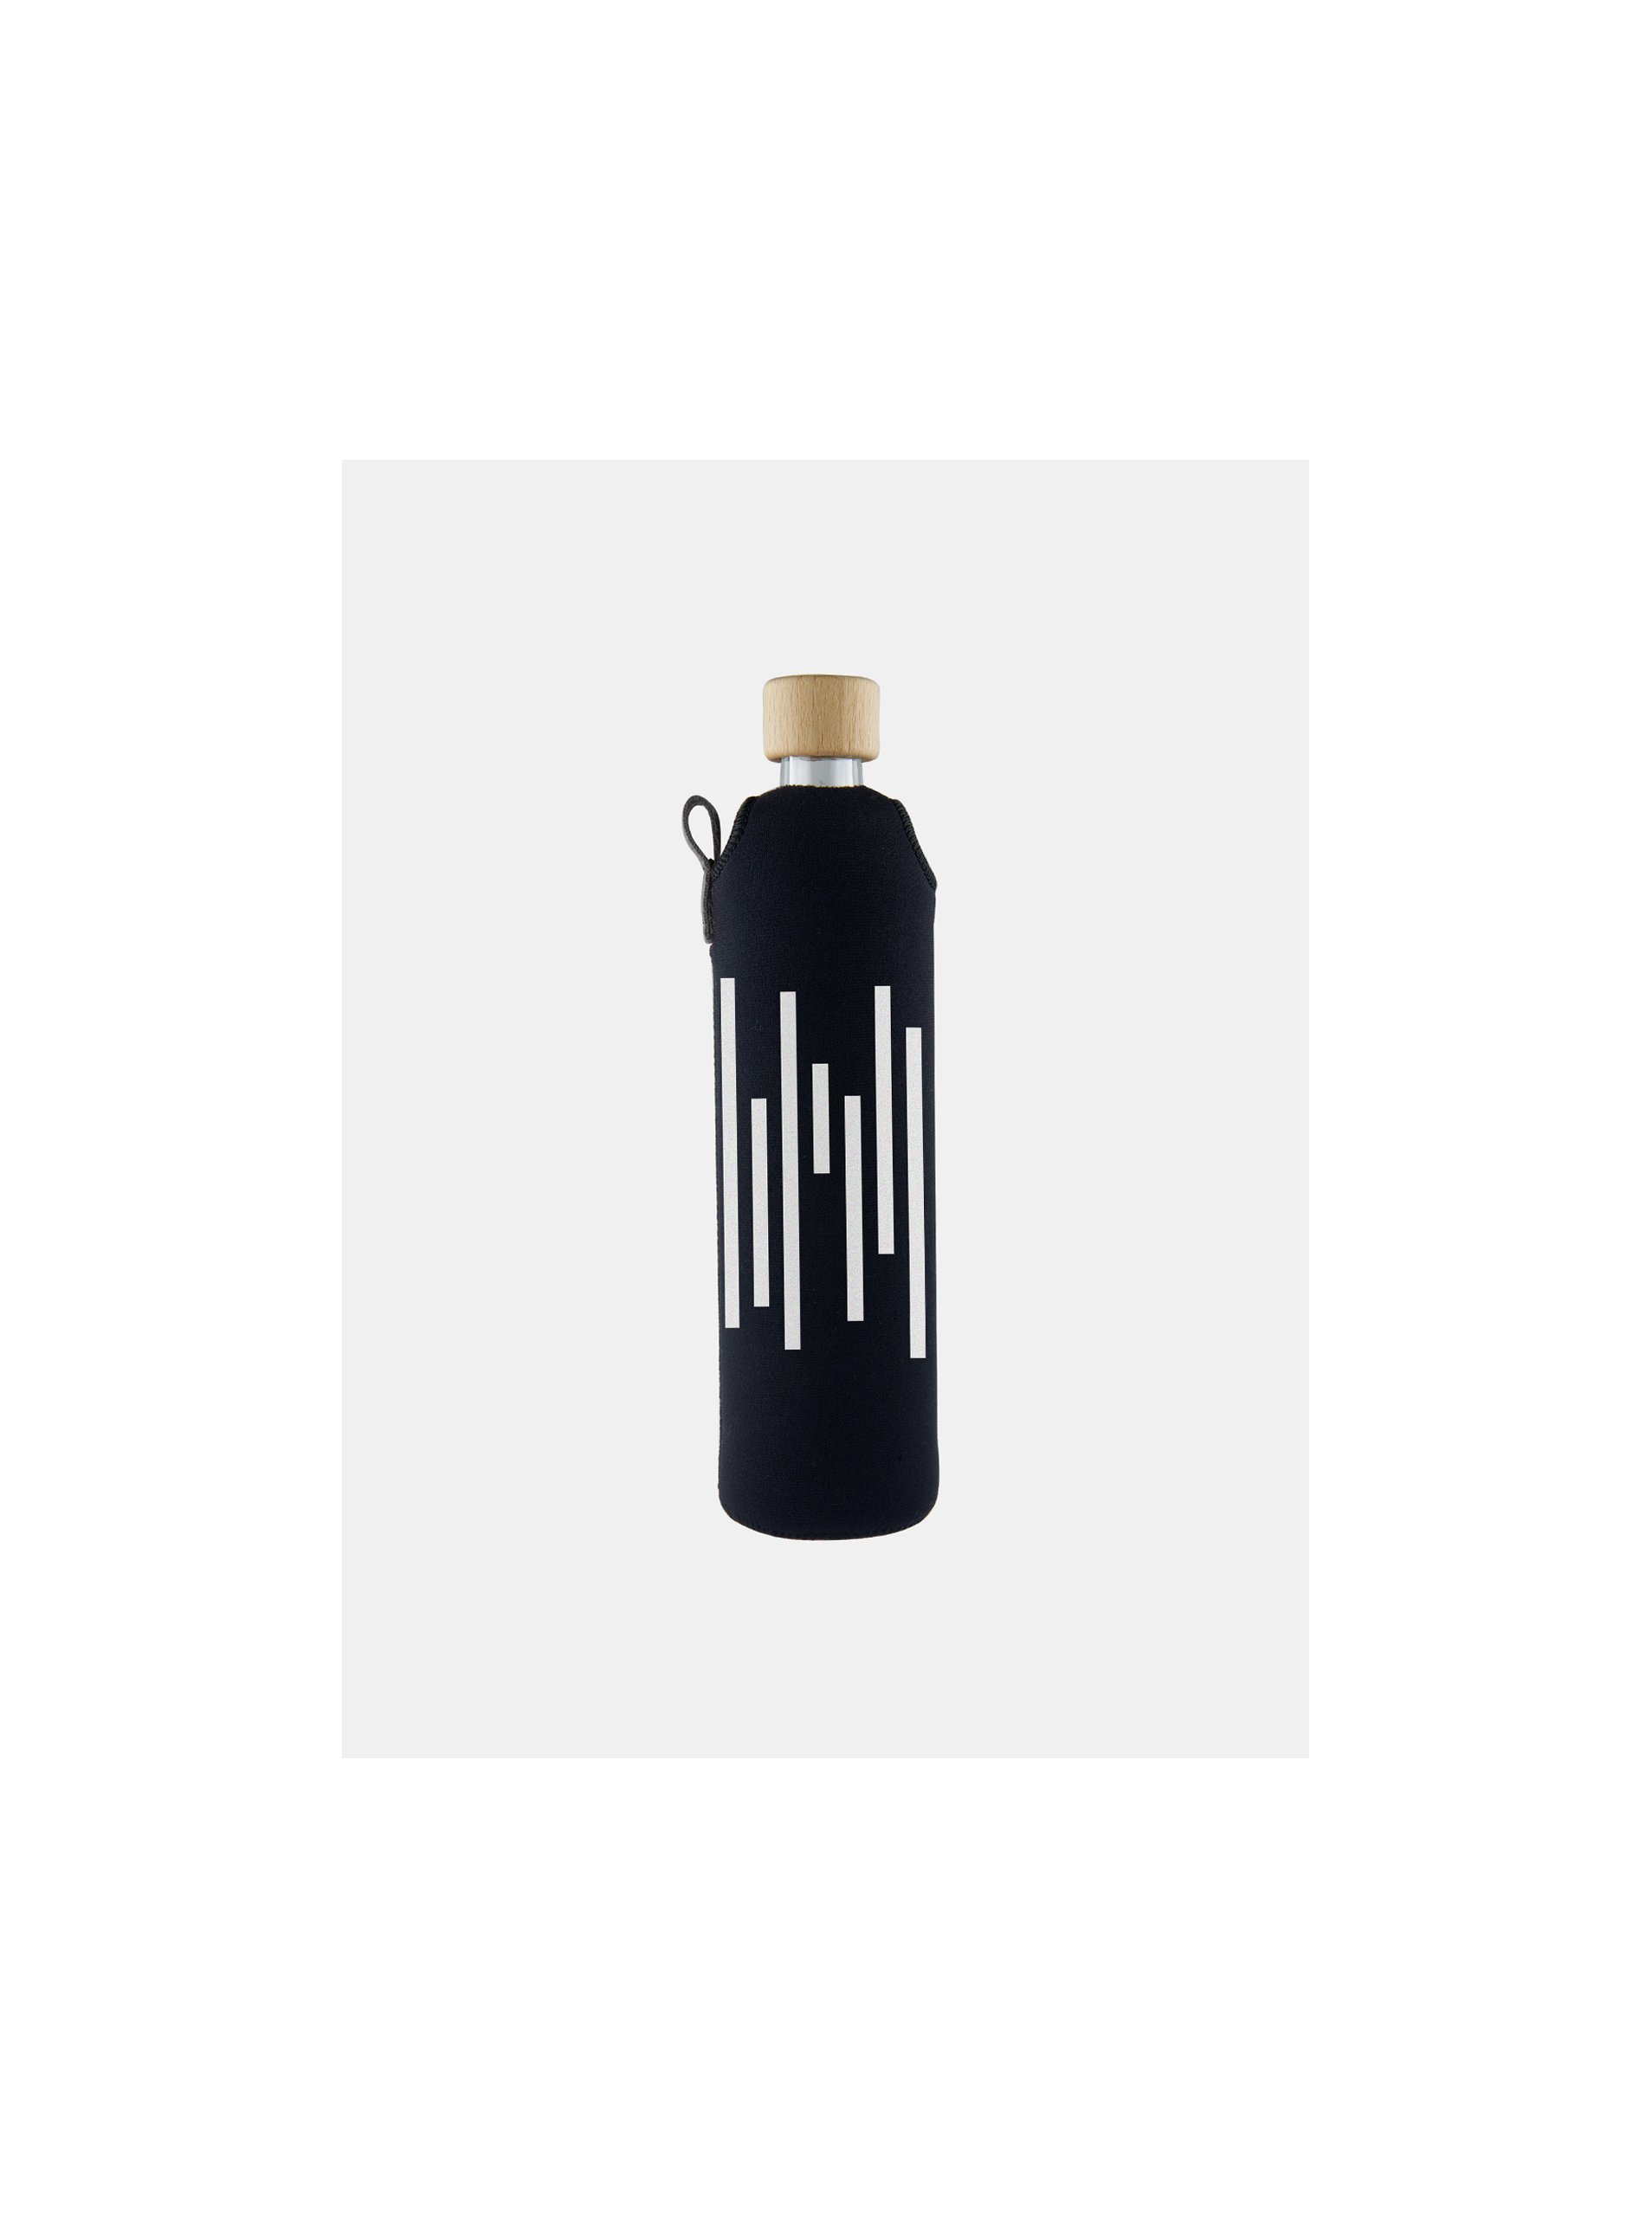 Lacno Sklenená fľaša v neoprénovom obale Drinkit Barcode 500 ml